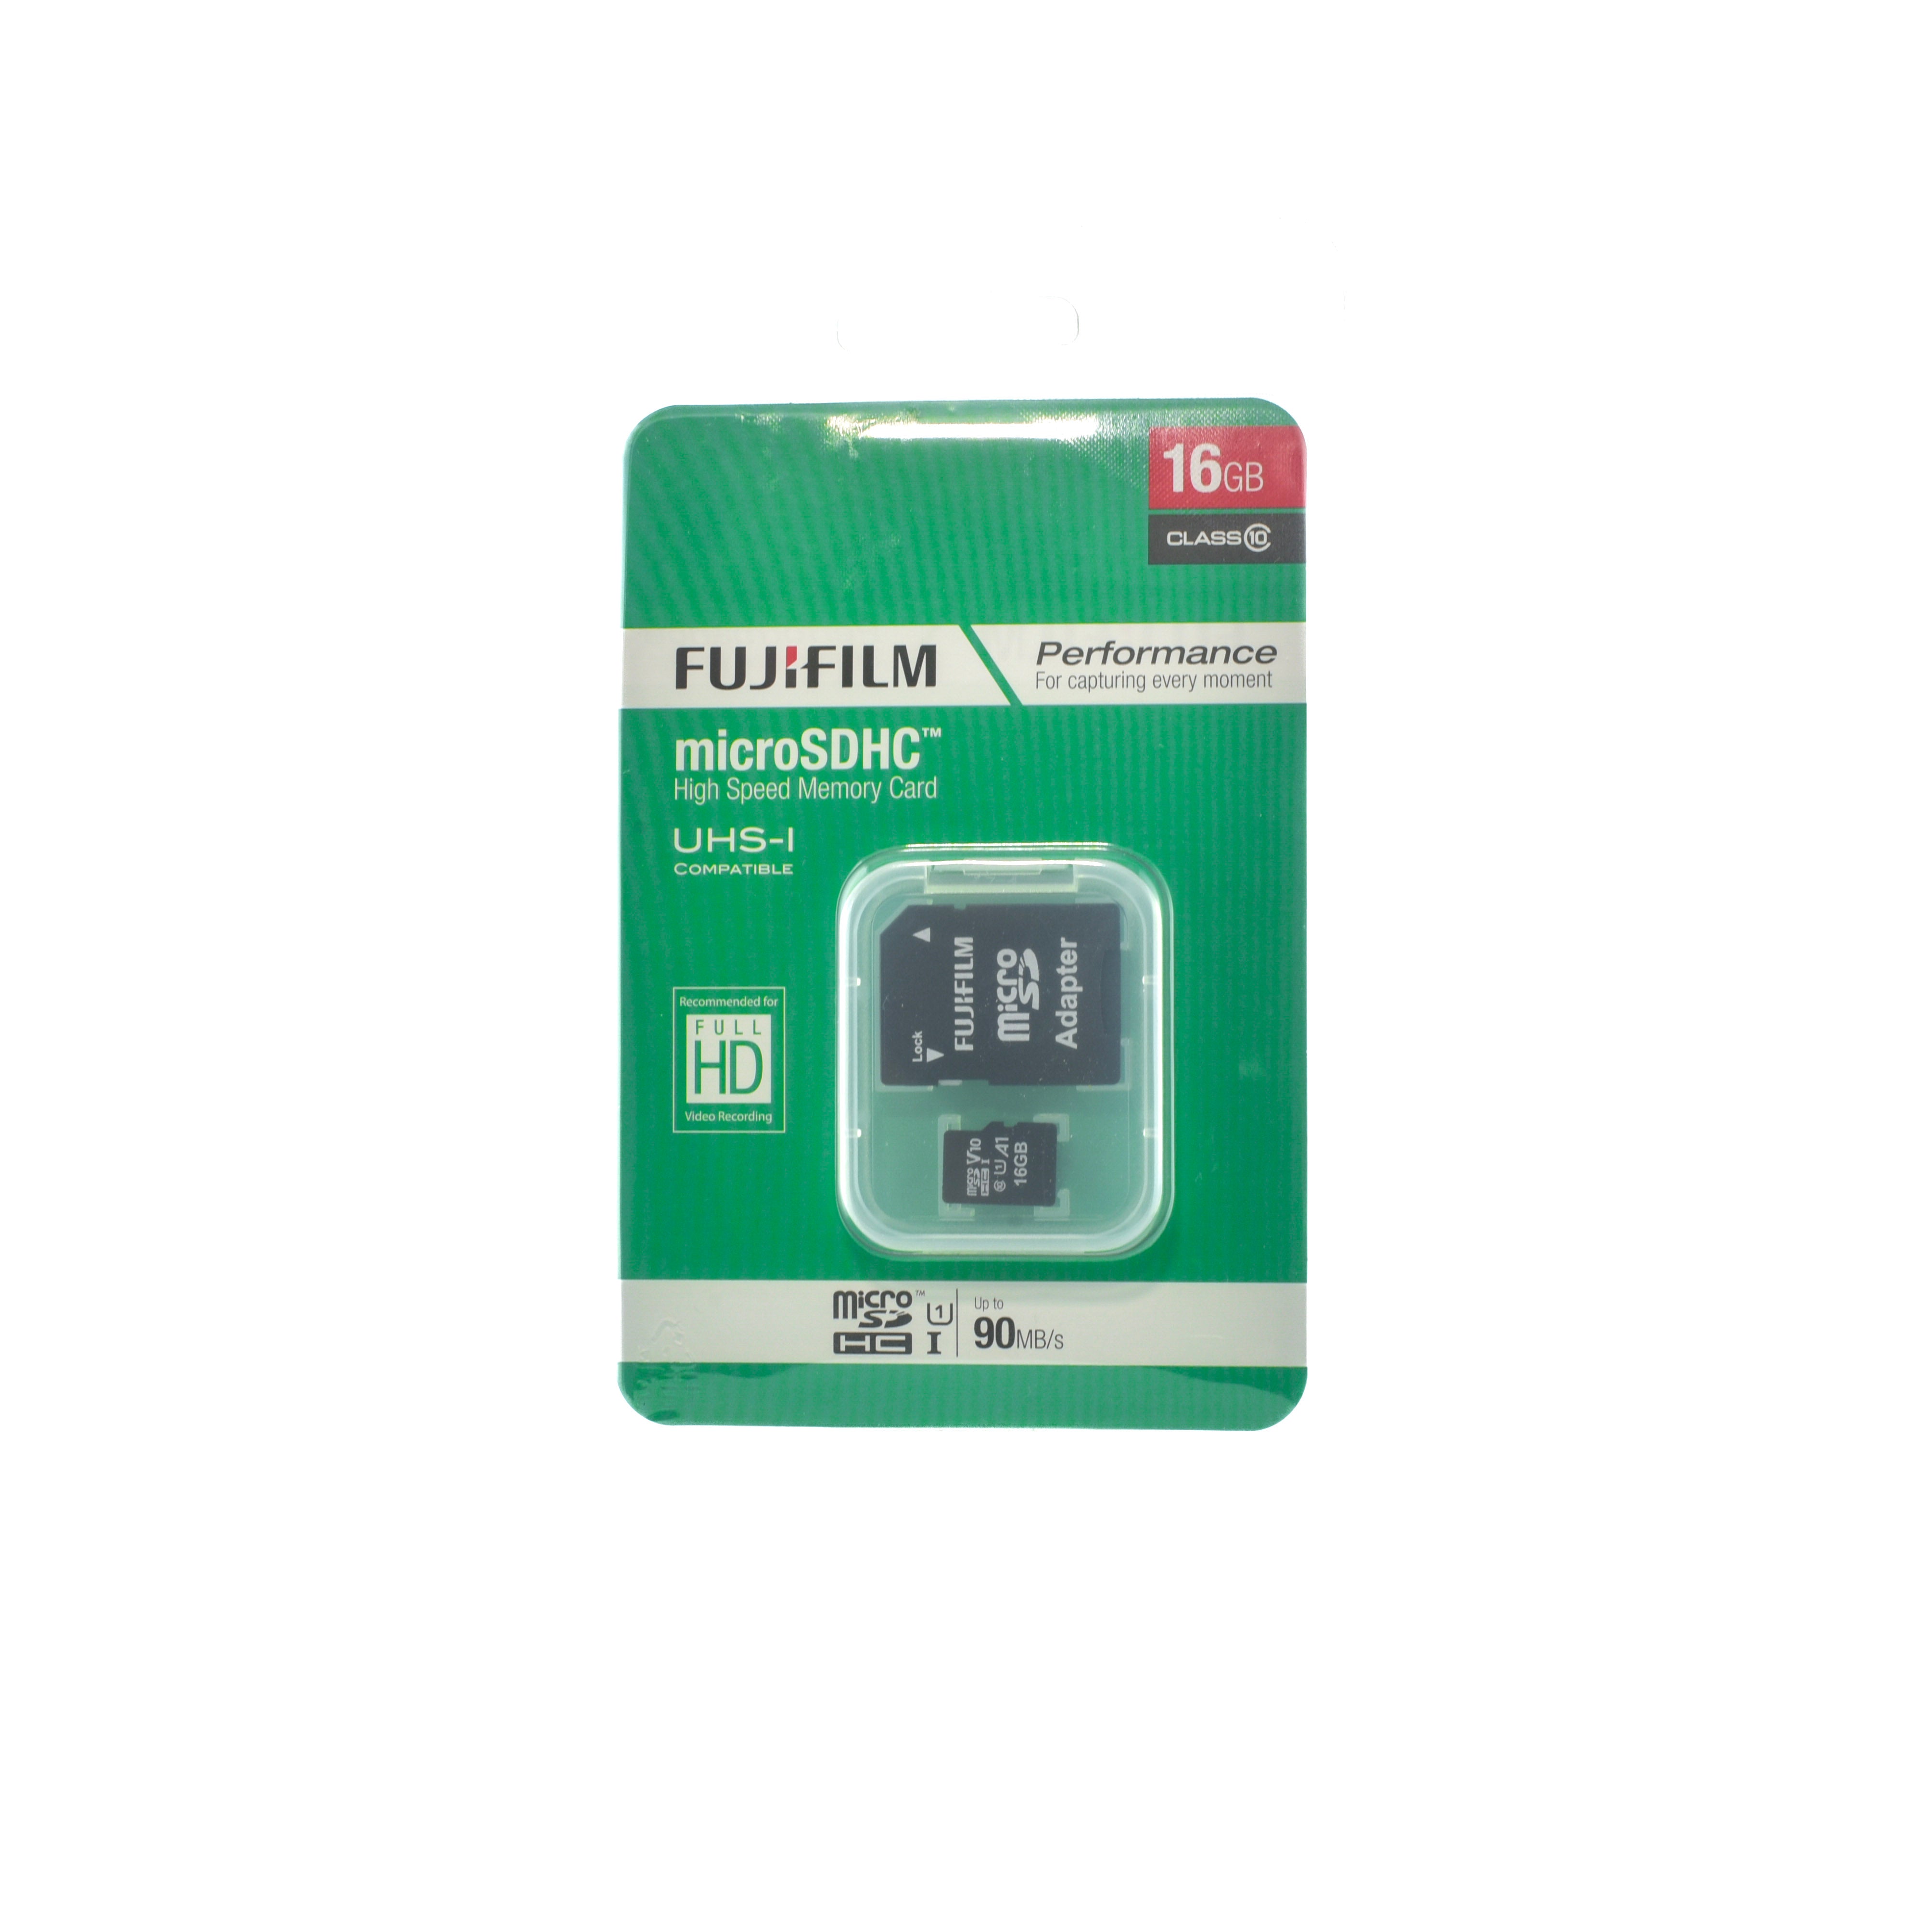 Fujifilm 16 GB Micro SDHC Card Performance